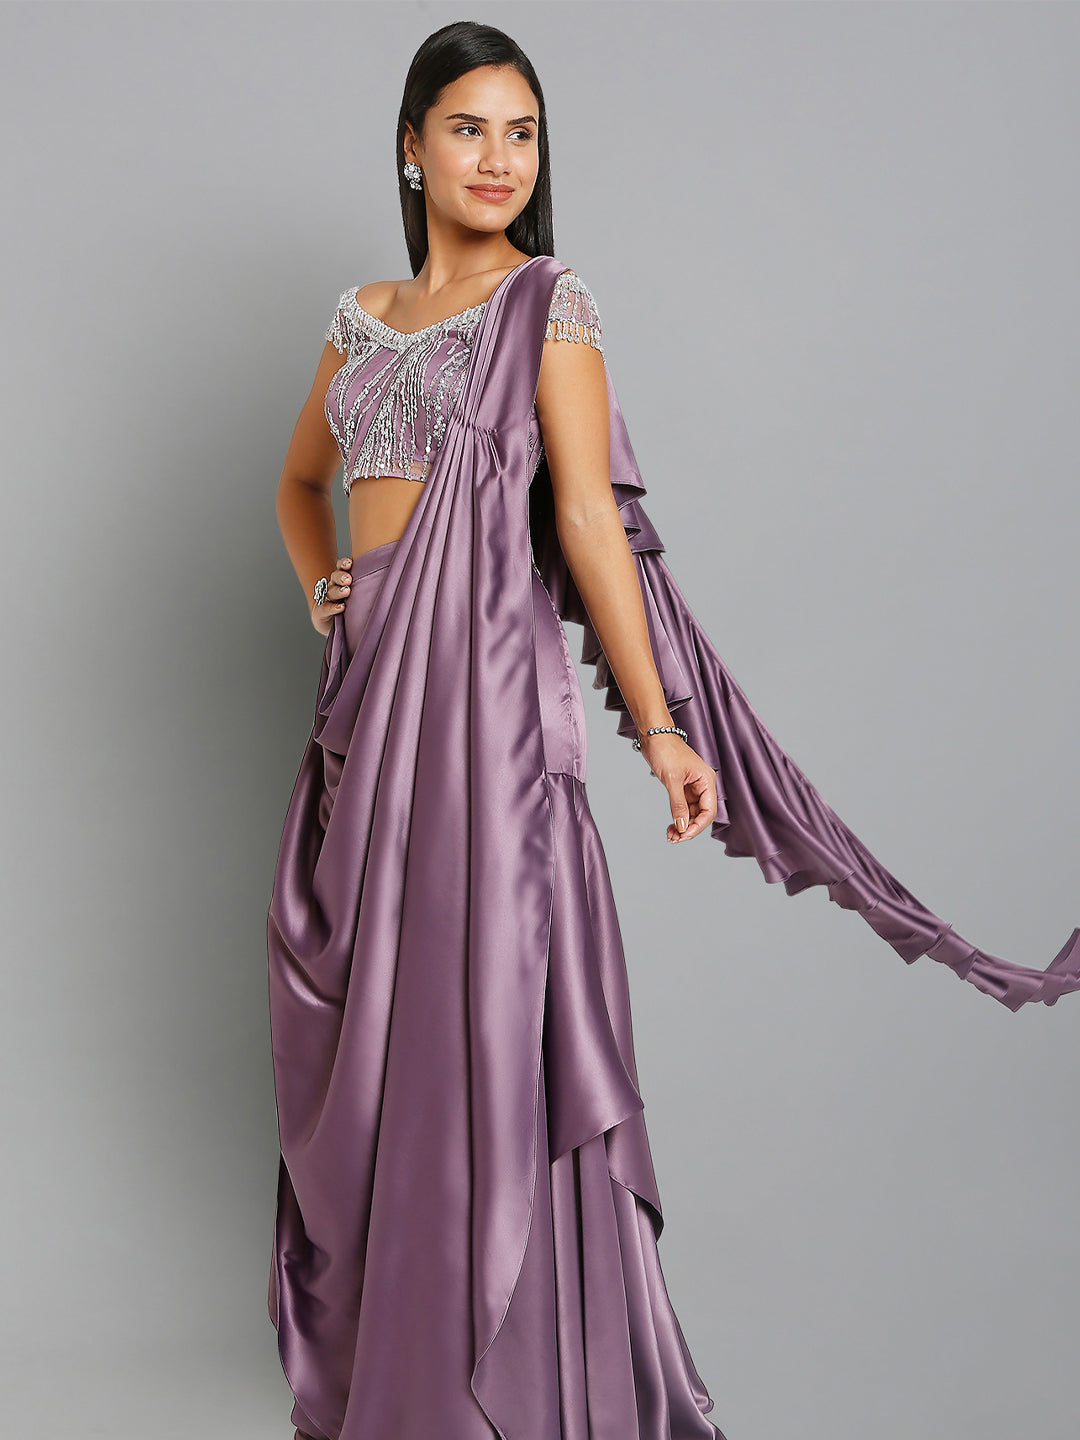 Plain PURPLE Ladies Fancy Satin Silk Saree, 5.5 m (separate blouse piece)  at Rs 420/piece in Surat